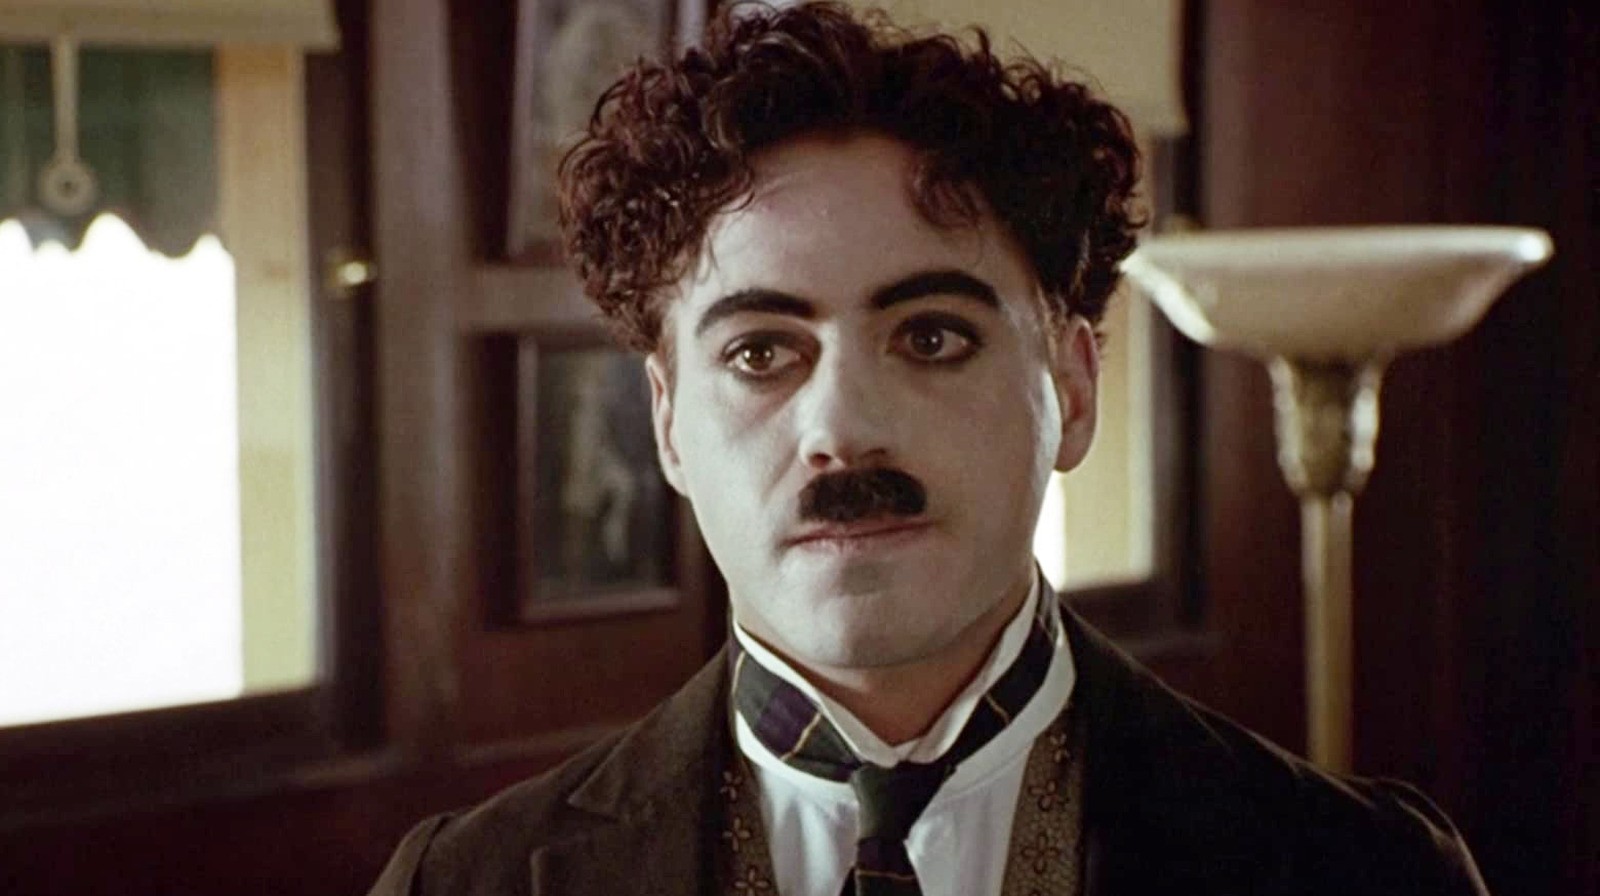 A still from Chaplin